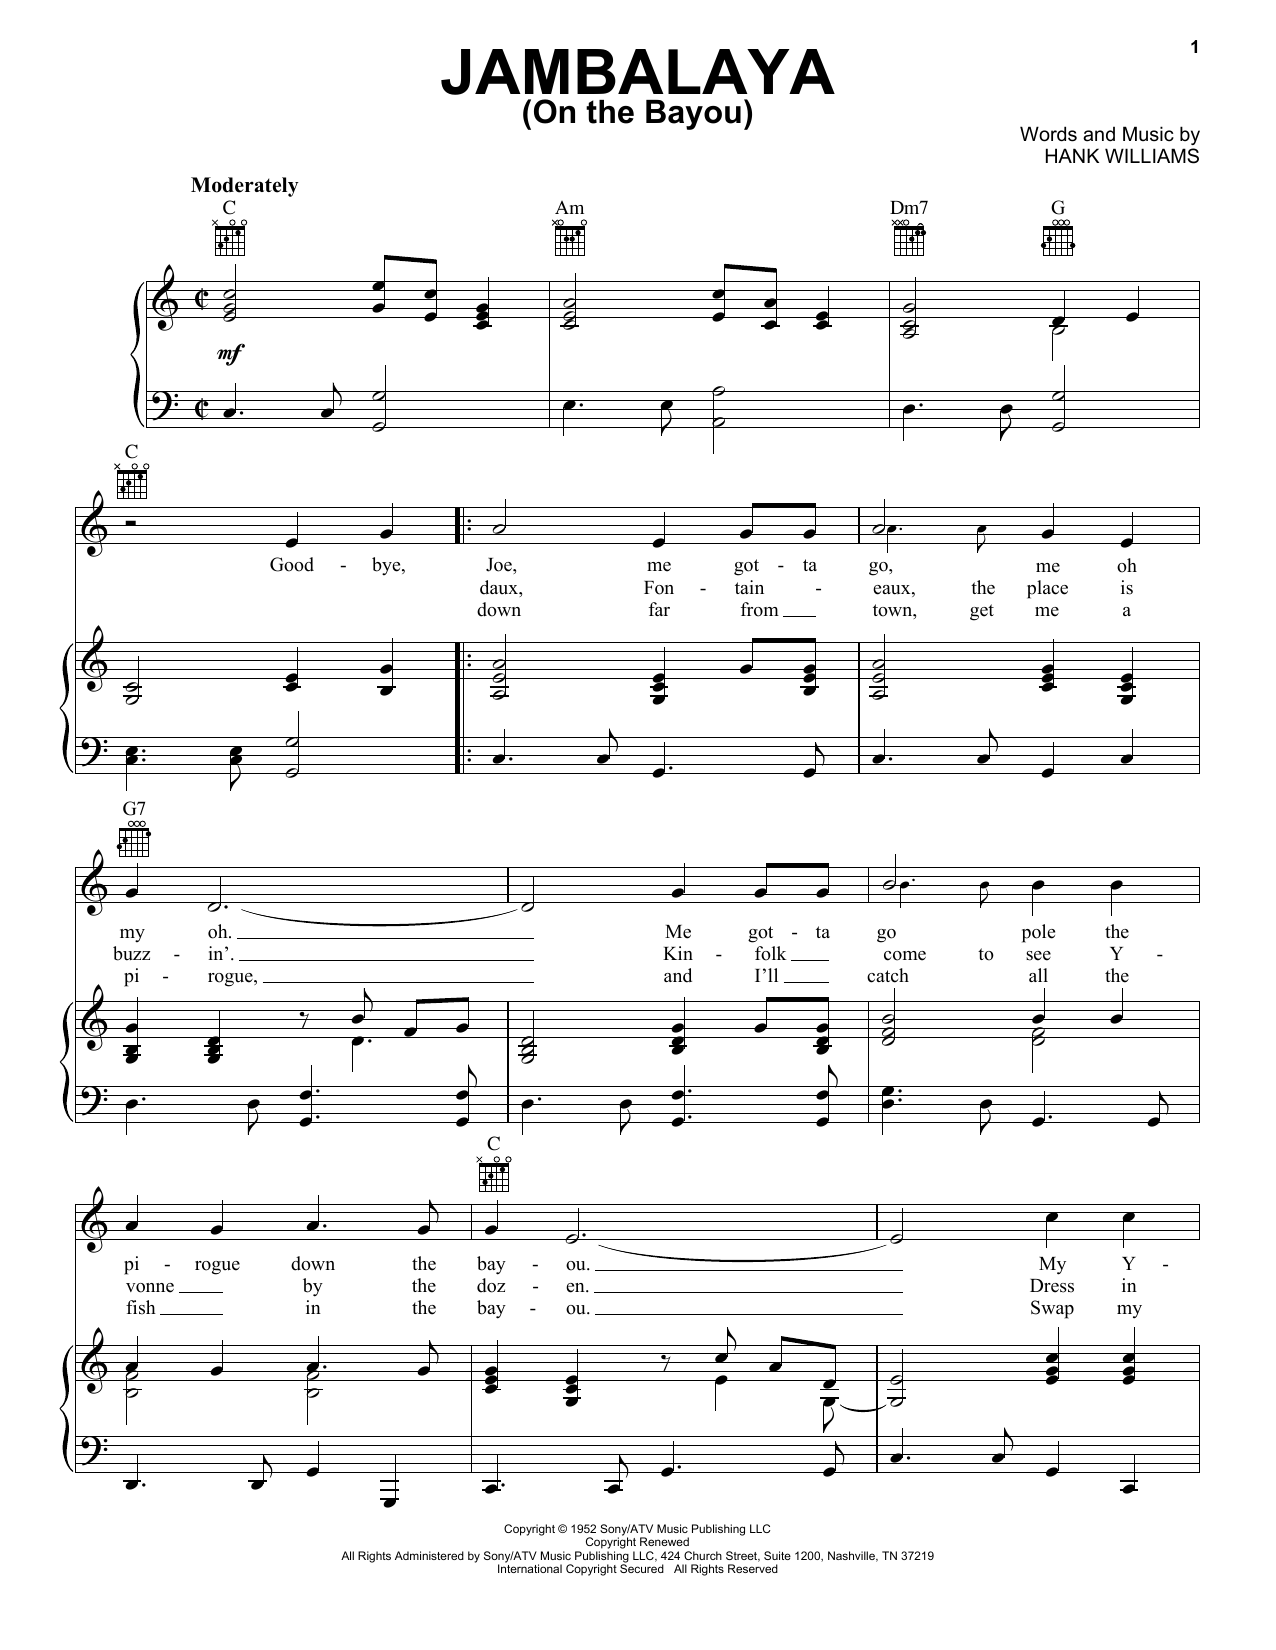 Hank Williams Jambalaya (On The Bayou) Sheet Music Notes & Chords for Chord Buddy - Download or Print PDF